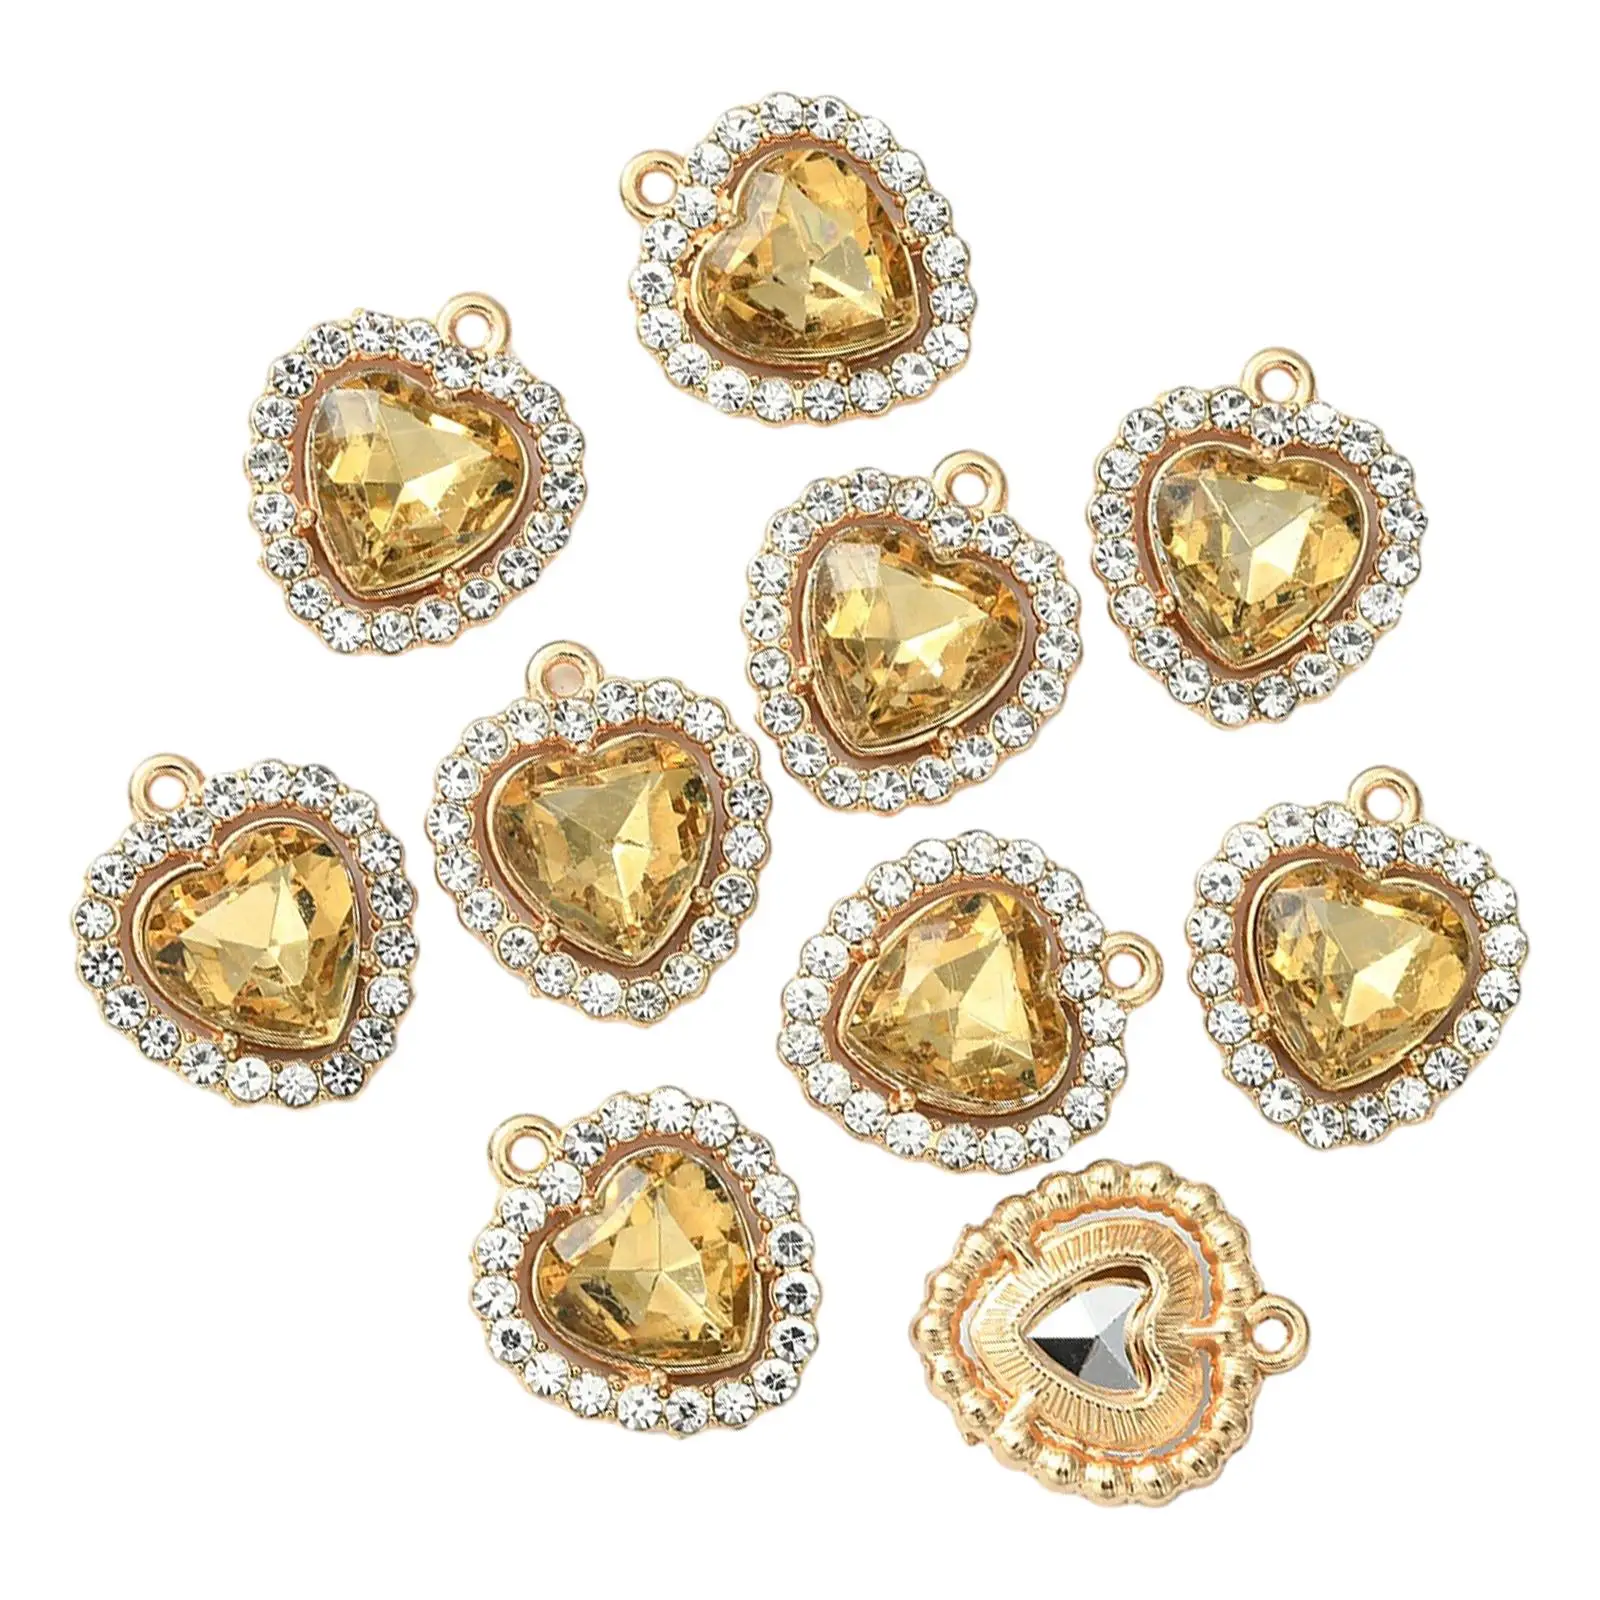 10x Charms Pendants Embellishments Pendants Craft Garment Embellishment Alloy Decoration Crystal Beads for Bags Wedding Clothing